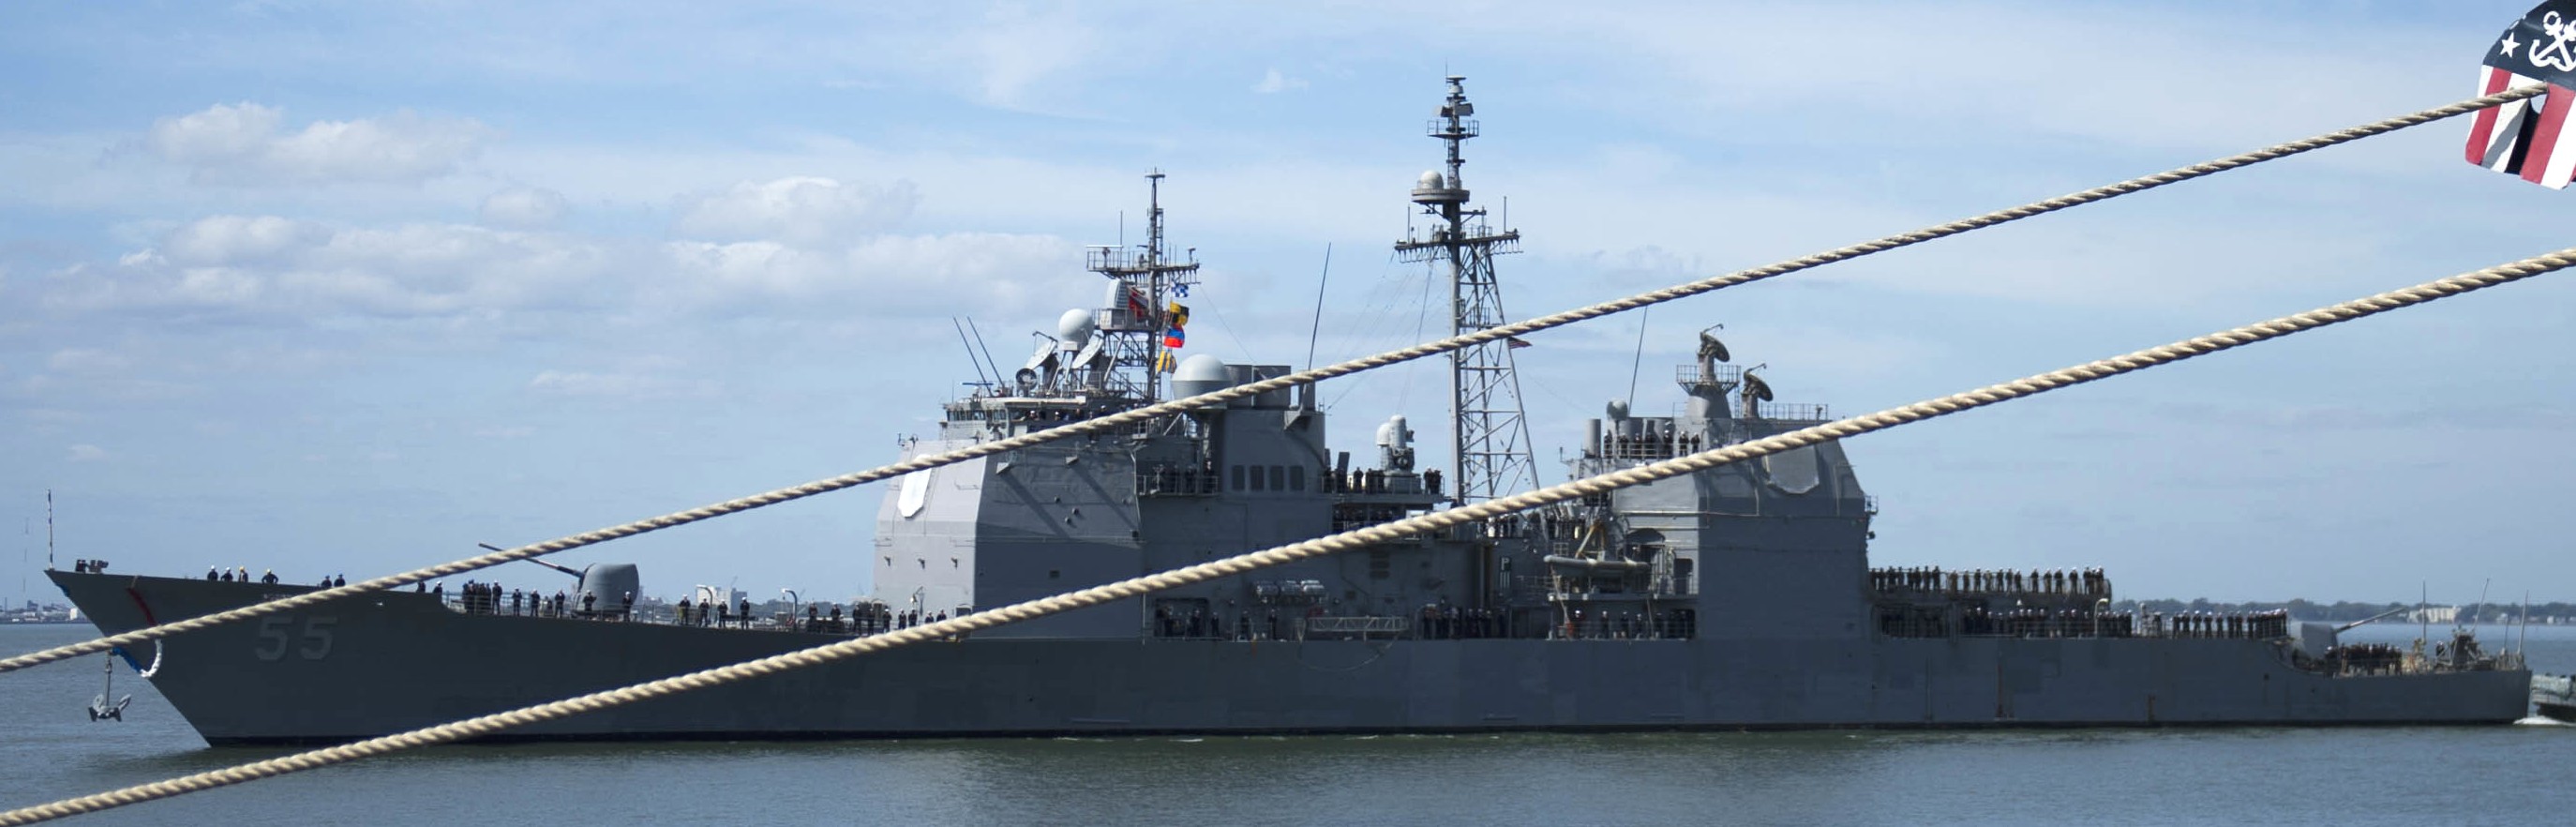 cg-55 uss leyte gulf ticonderoga class guided missile cruiser aegis us navy 55